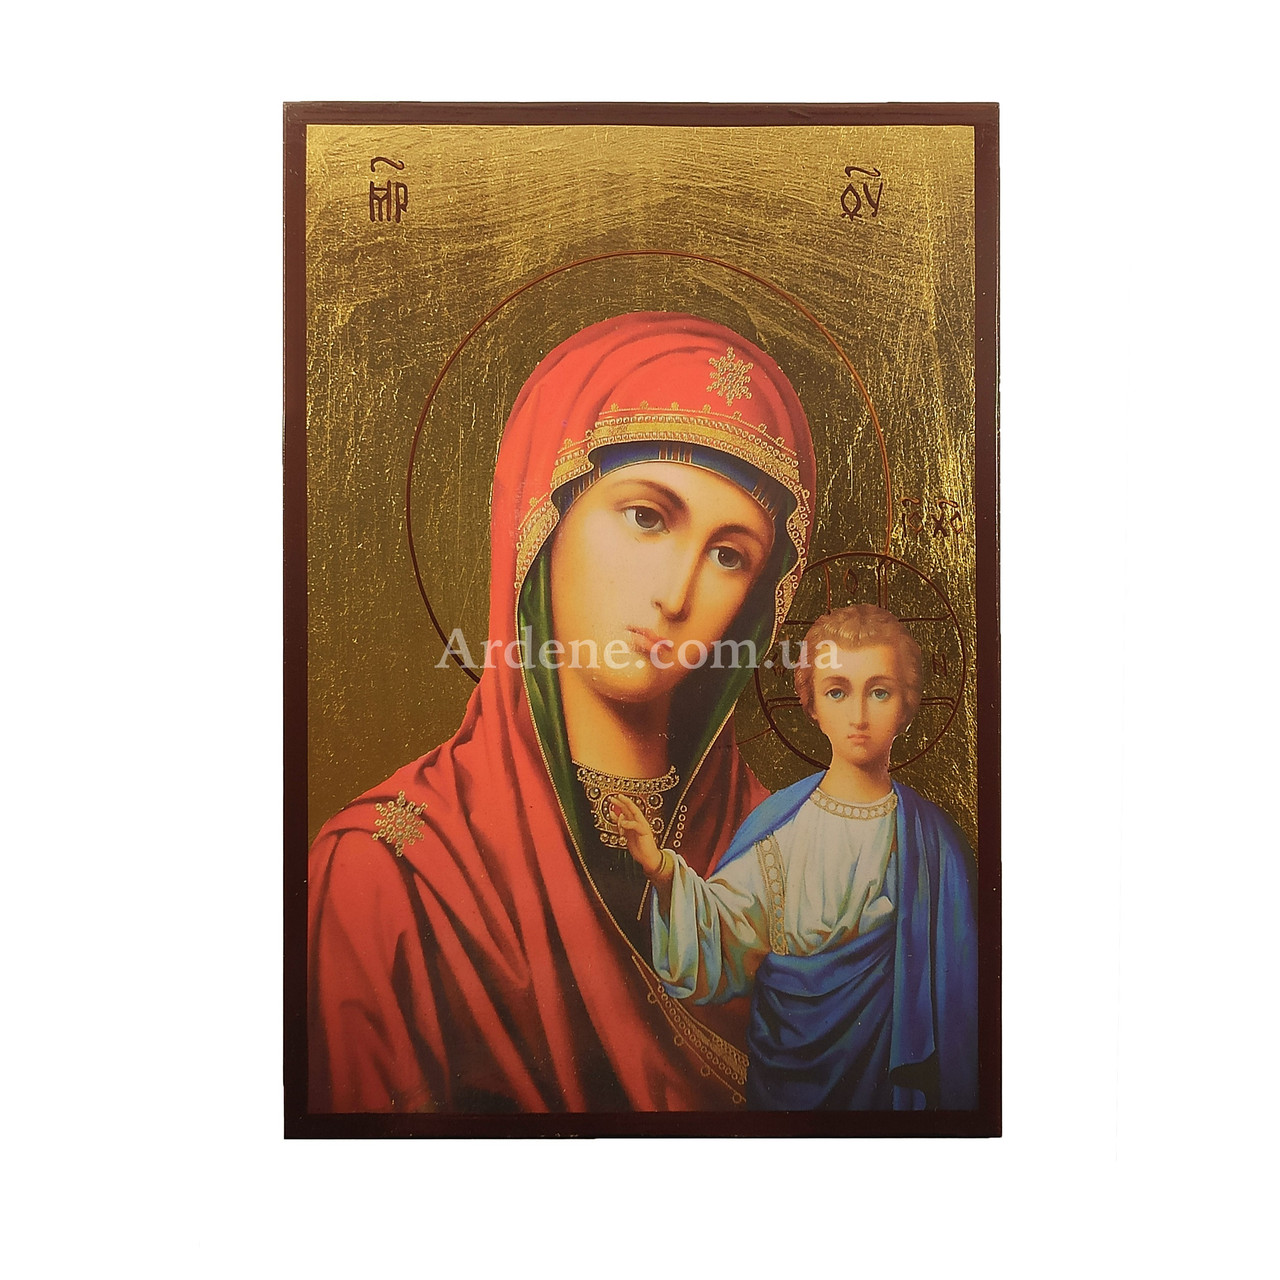 Казанська ікона Божої Матері розмір 14 Х 19 см